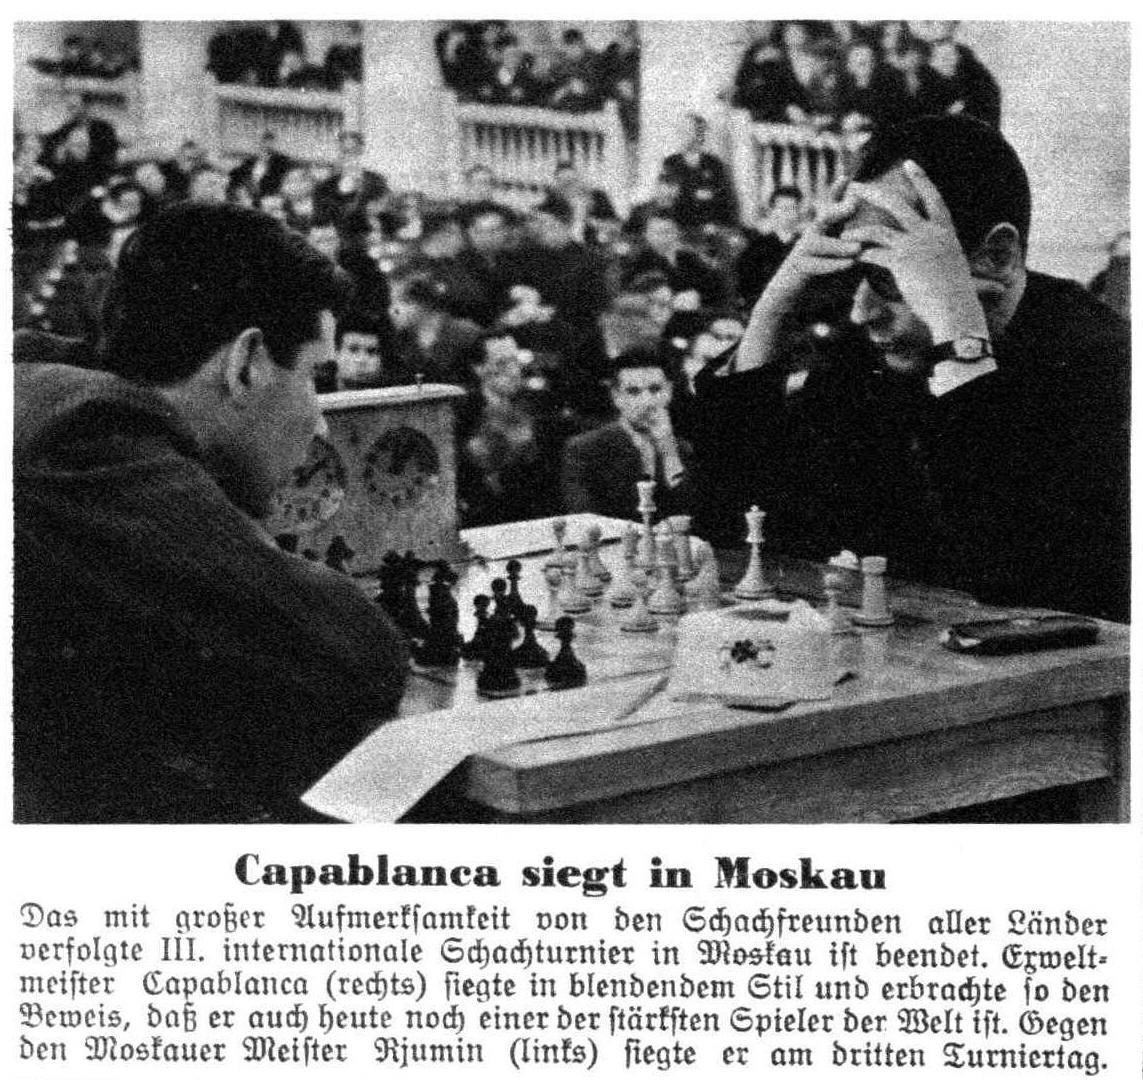 The Immortal Games of Capablanca - British Chess News